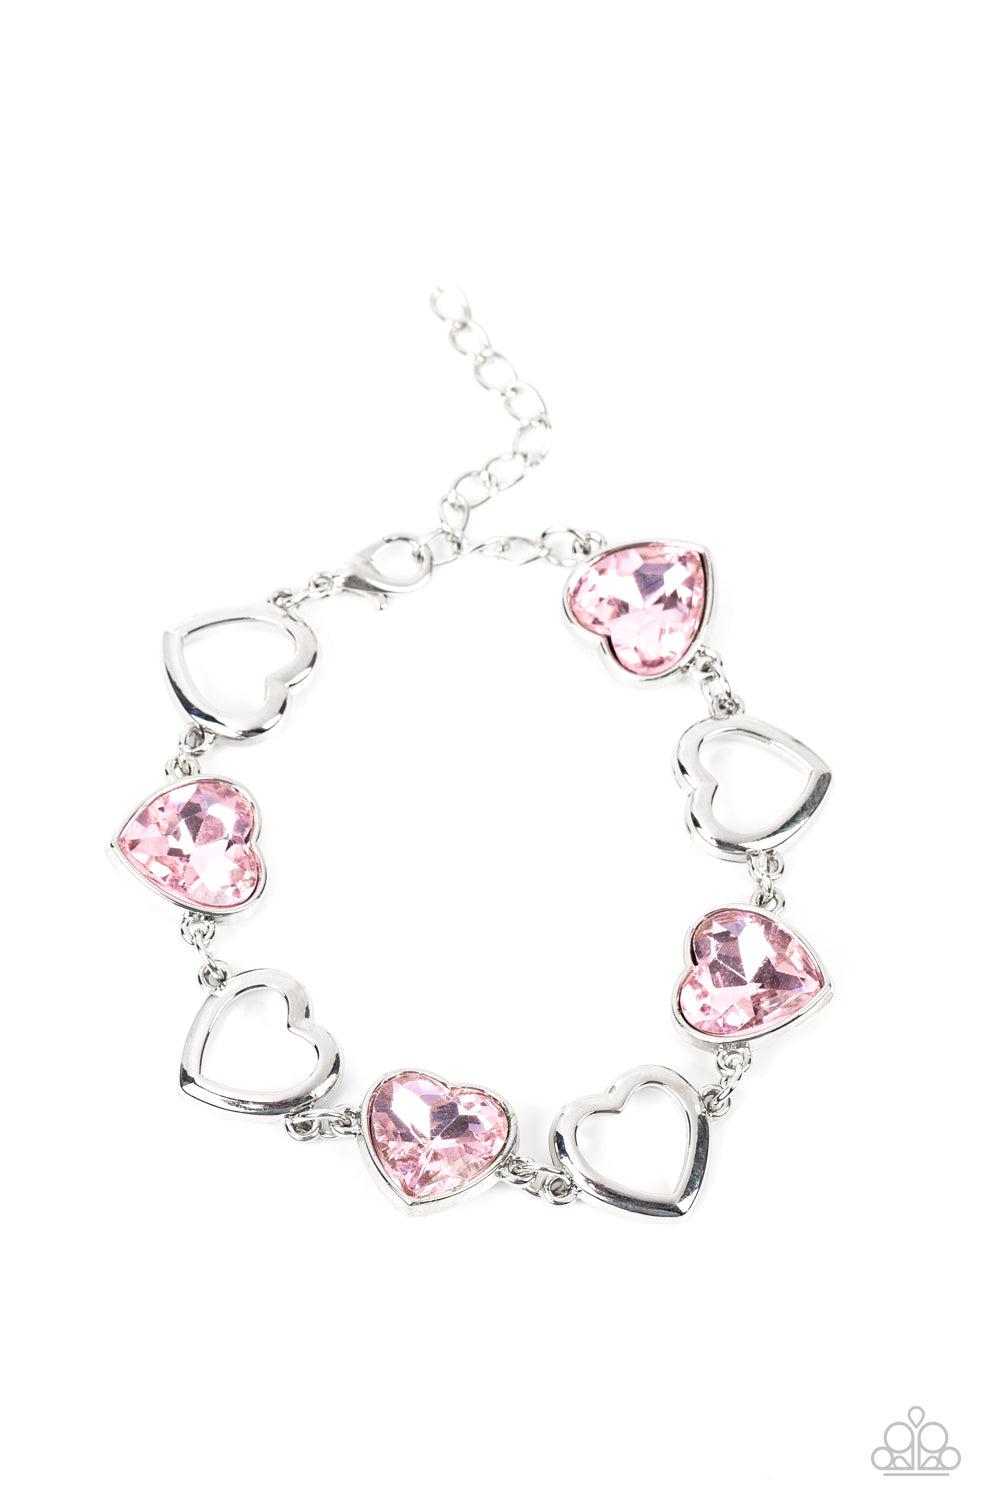 Sentimental Sweethearts Pink Rhinestone Heart Bracelet - Paparazzi Accessories- lightbox - CarasShop.com - $5 Jewelry by Cara Jewels